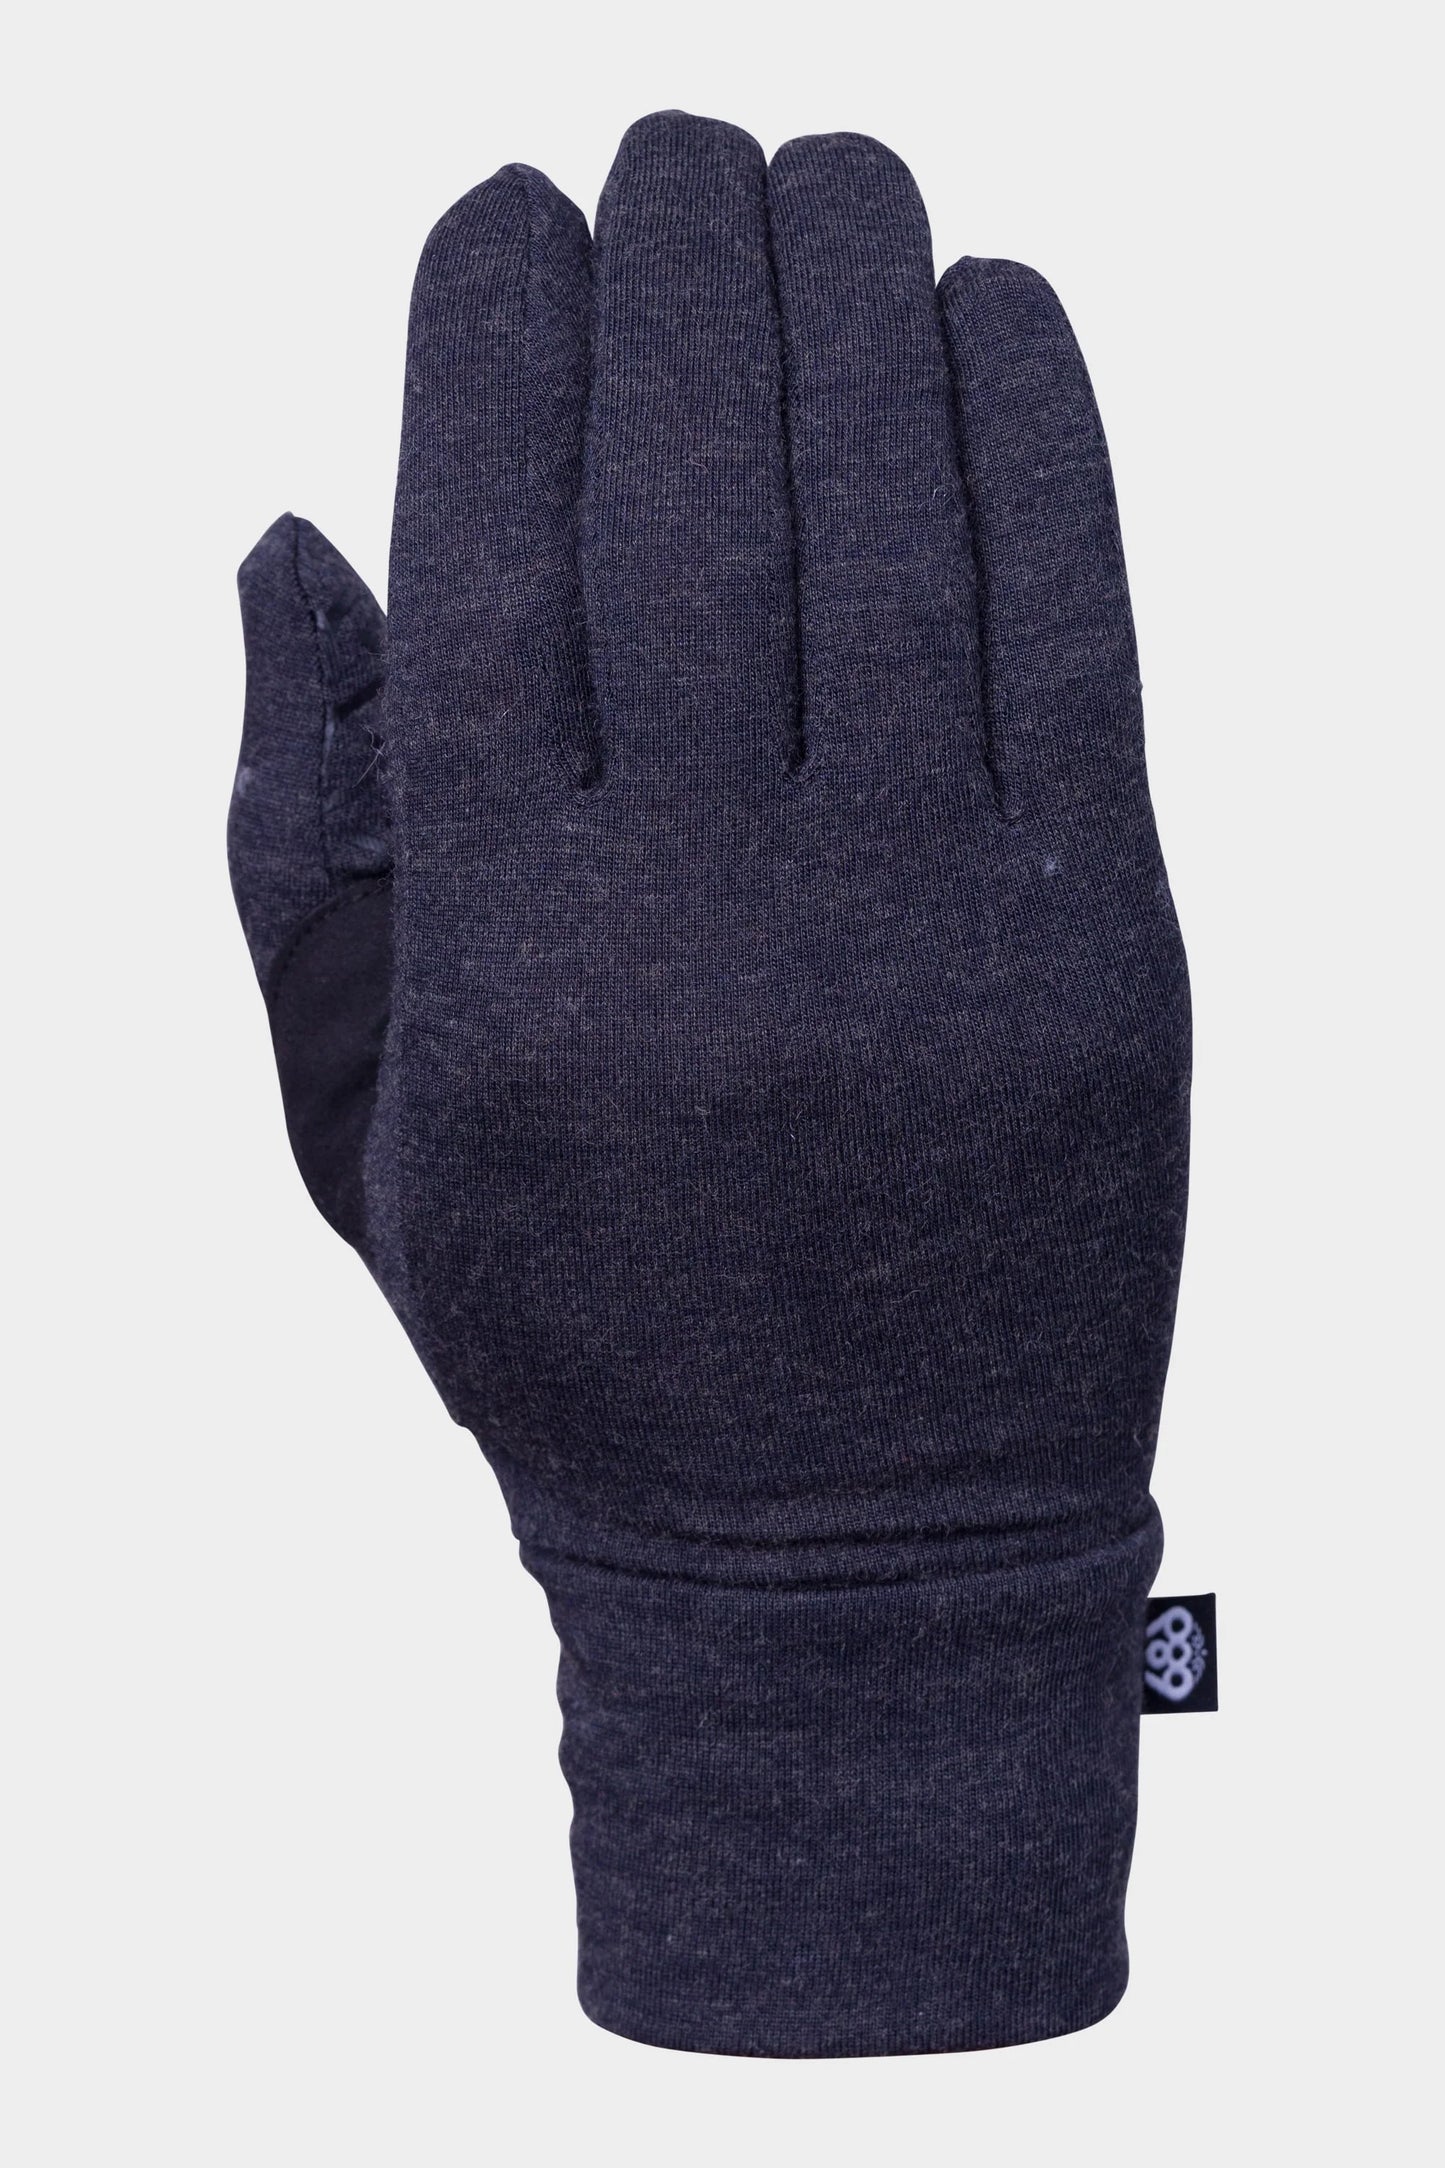 686 - Womens Gore-Tex Smarty Gauntlet Glove